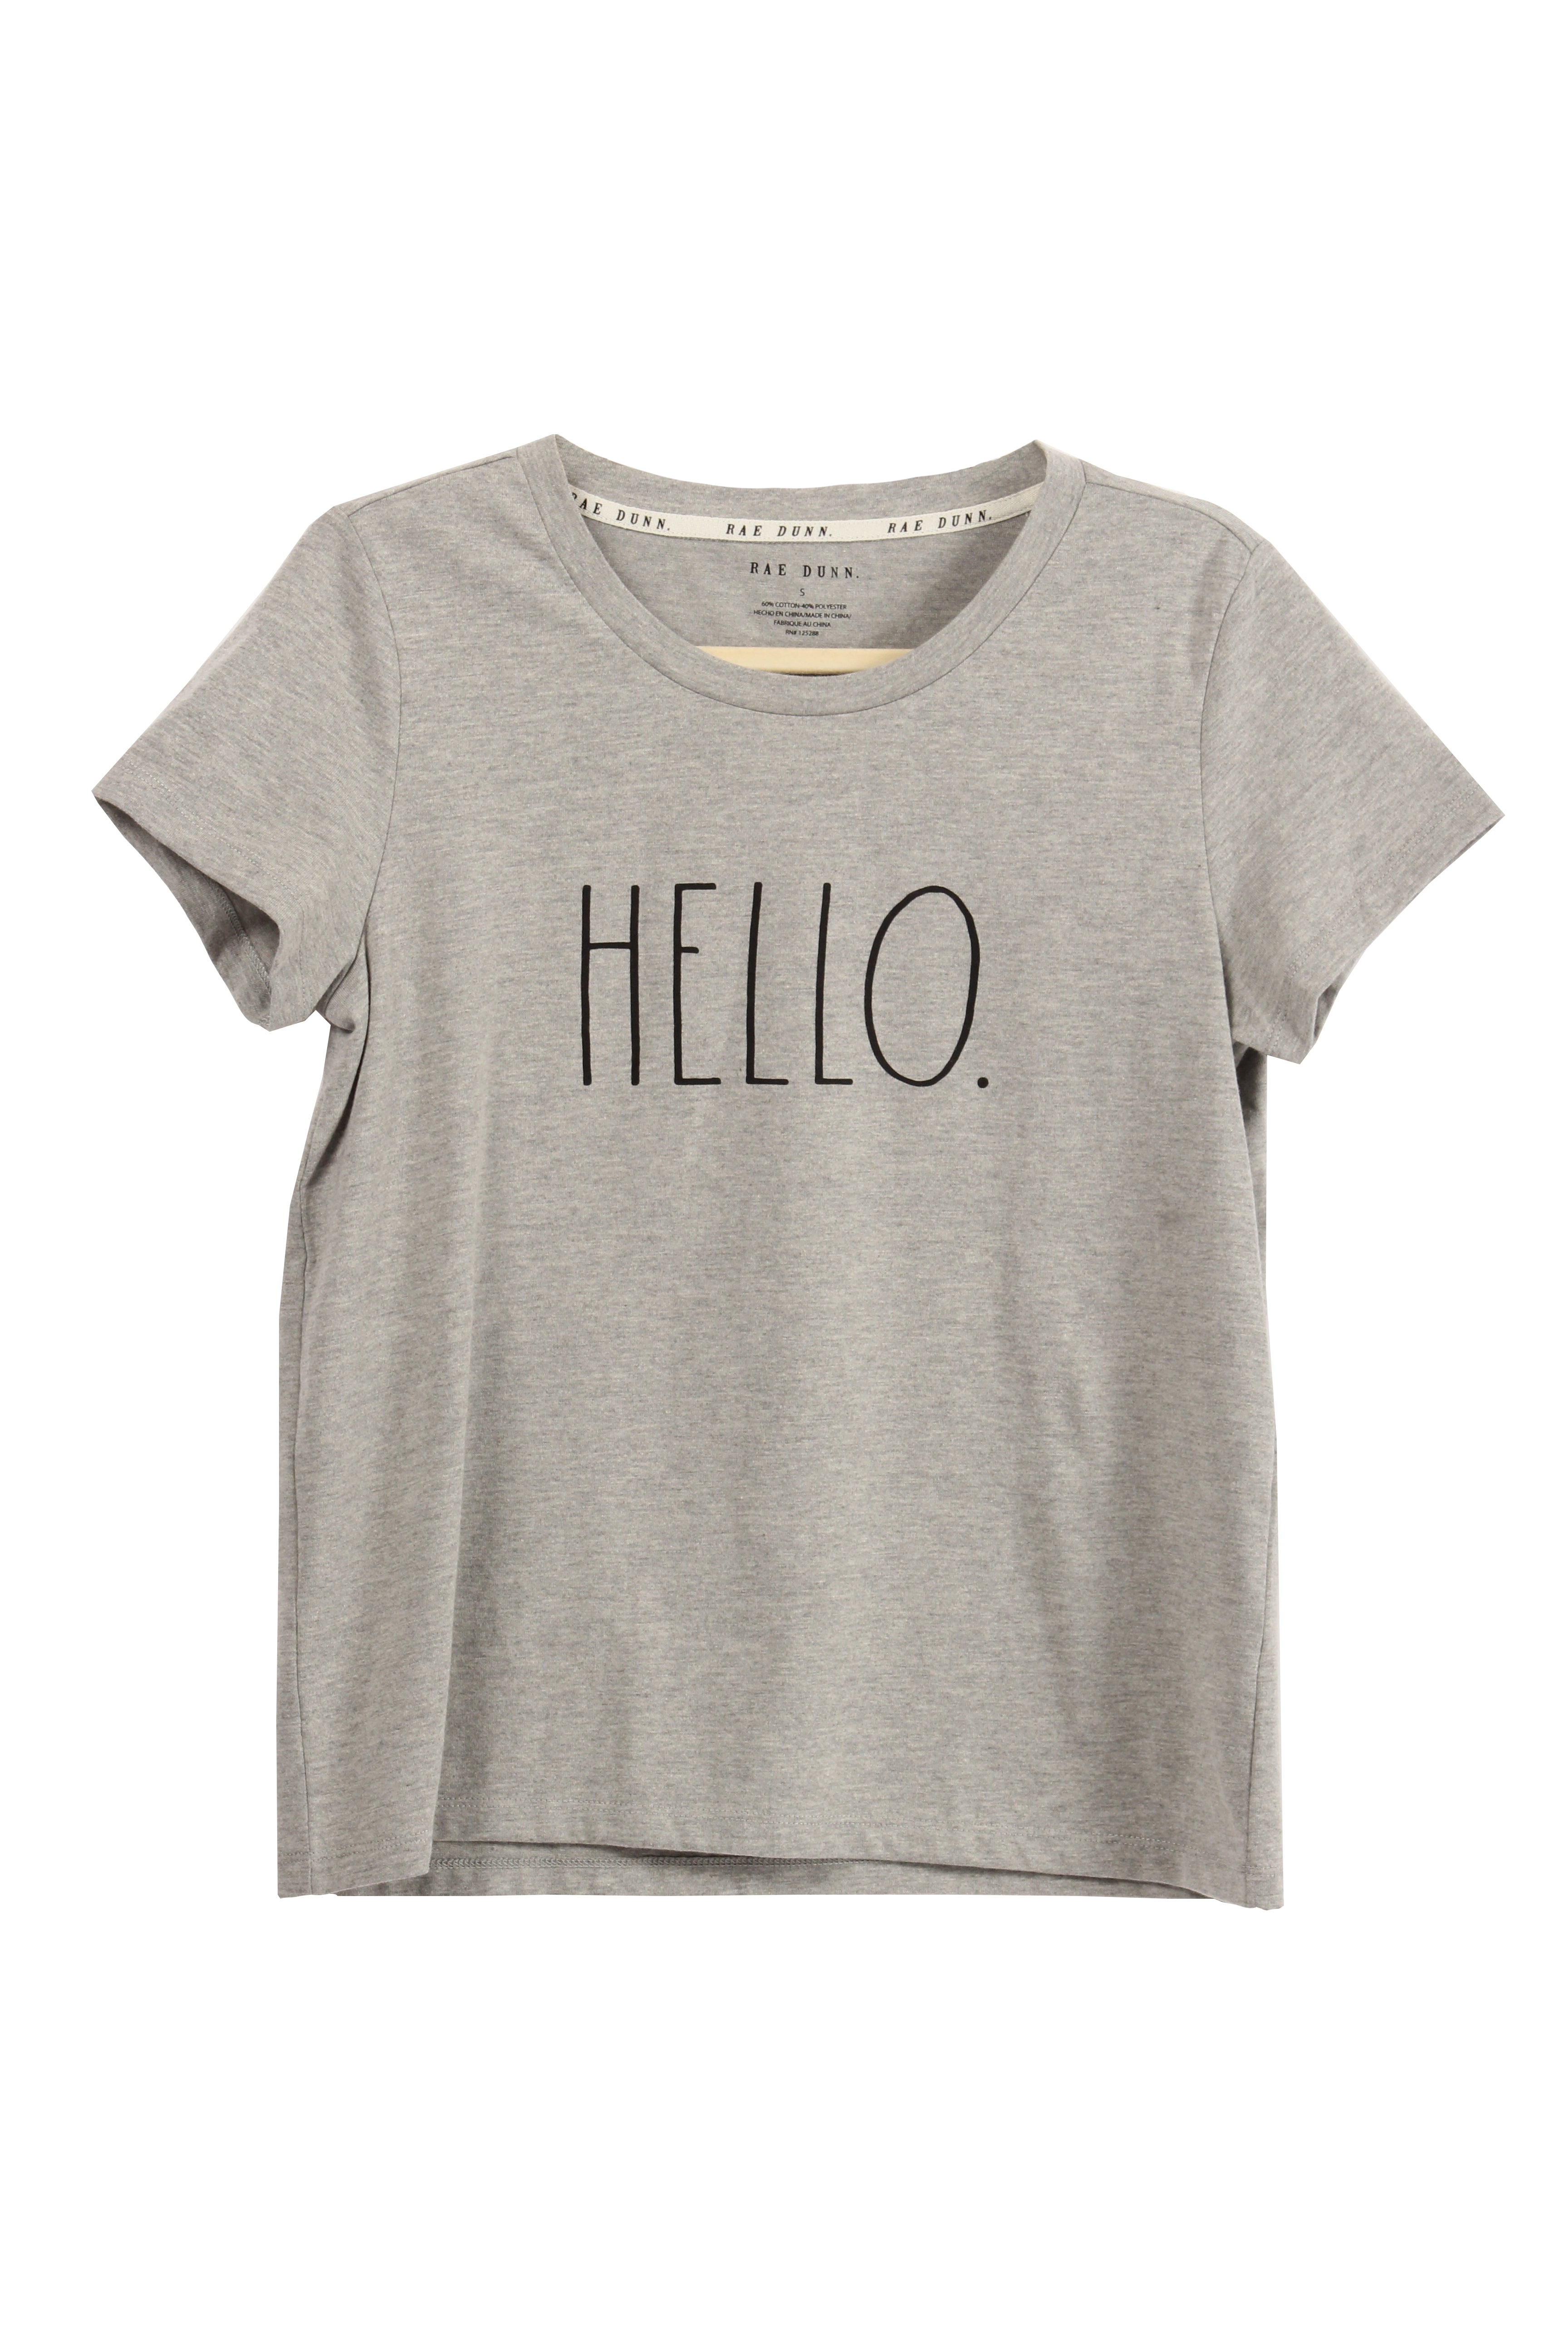 Women's "HELLO" Short Sleeve Icon T-Shirt - Shop Rae Dunn Apparel and Sleepwear